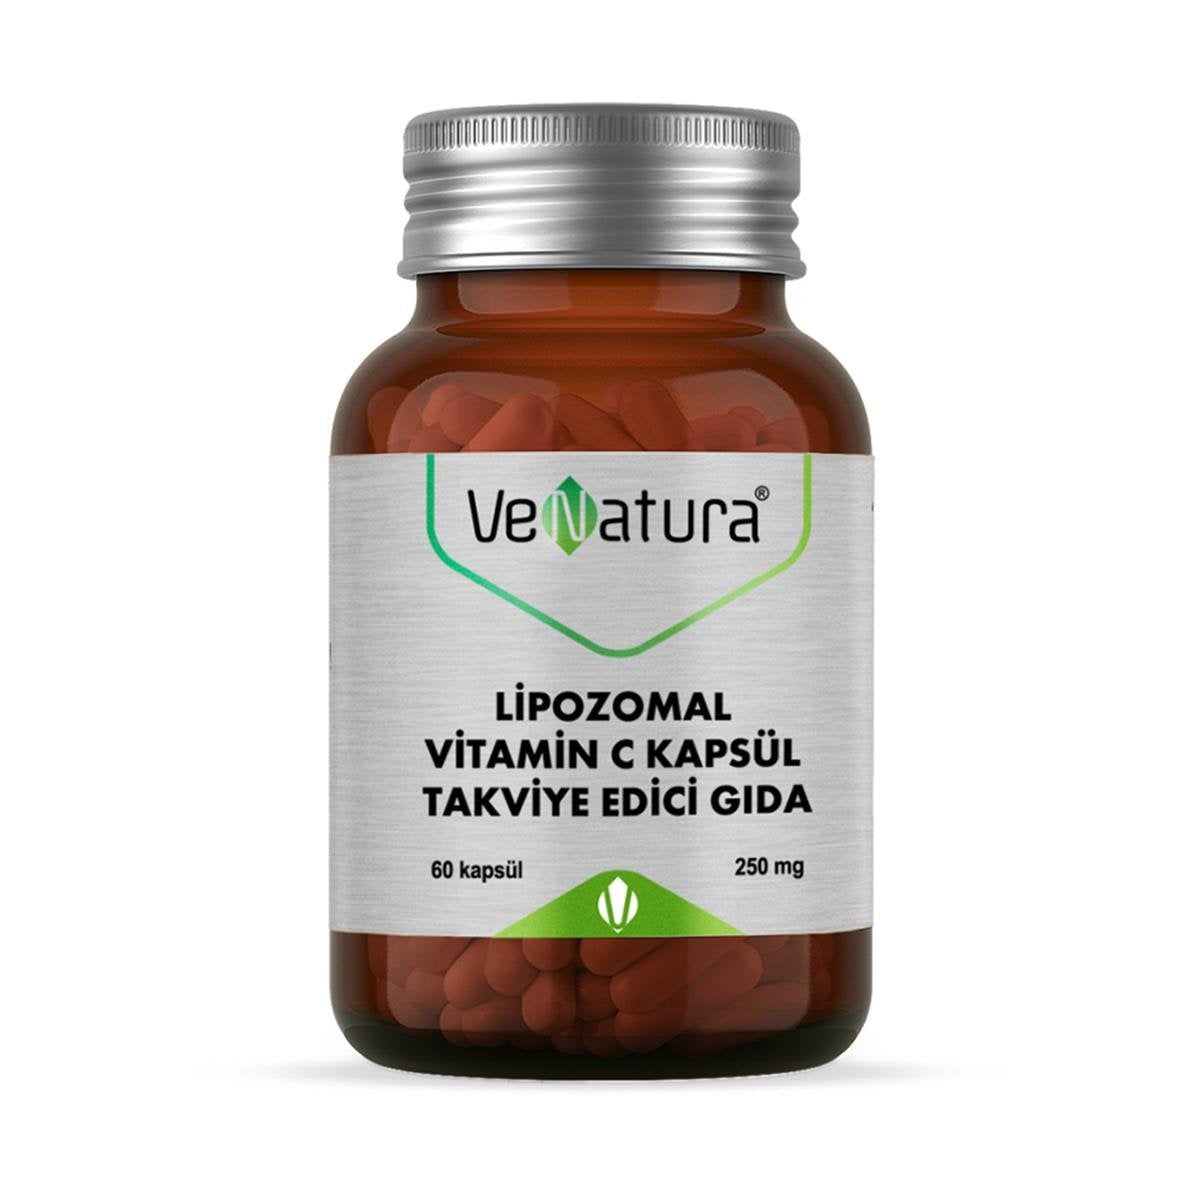 VeNatura Lipozomal Vitamin C Kapsül 60 Kapsül